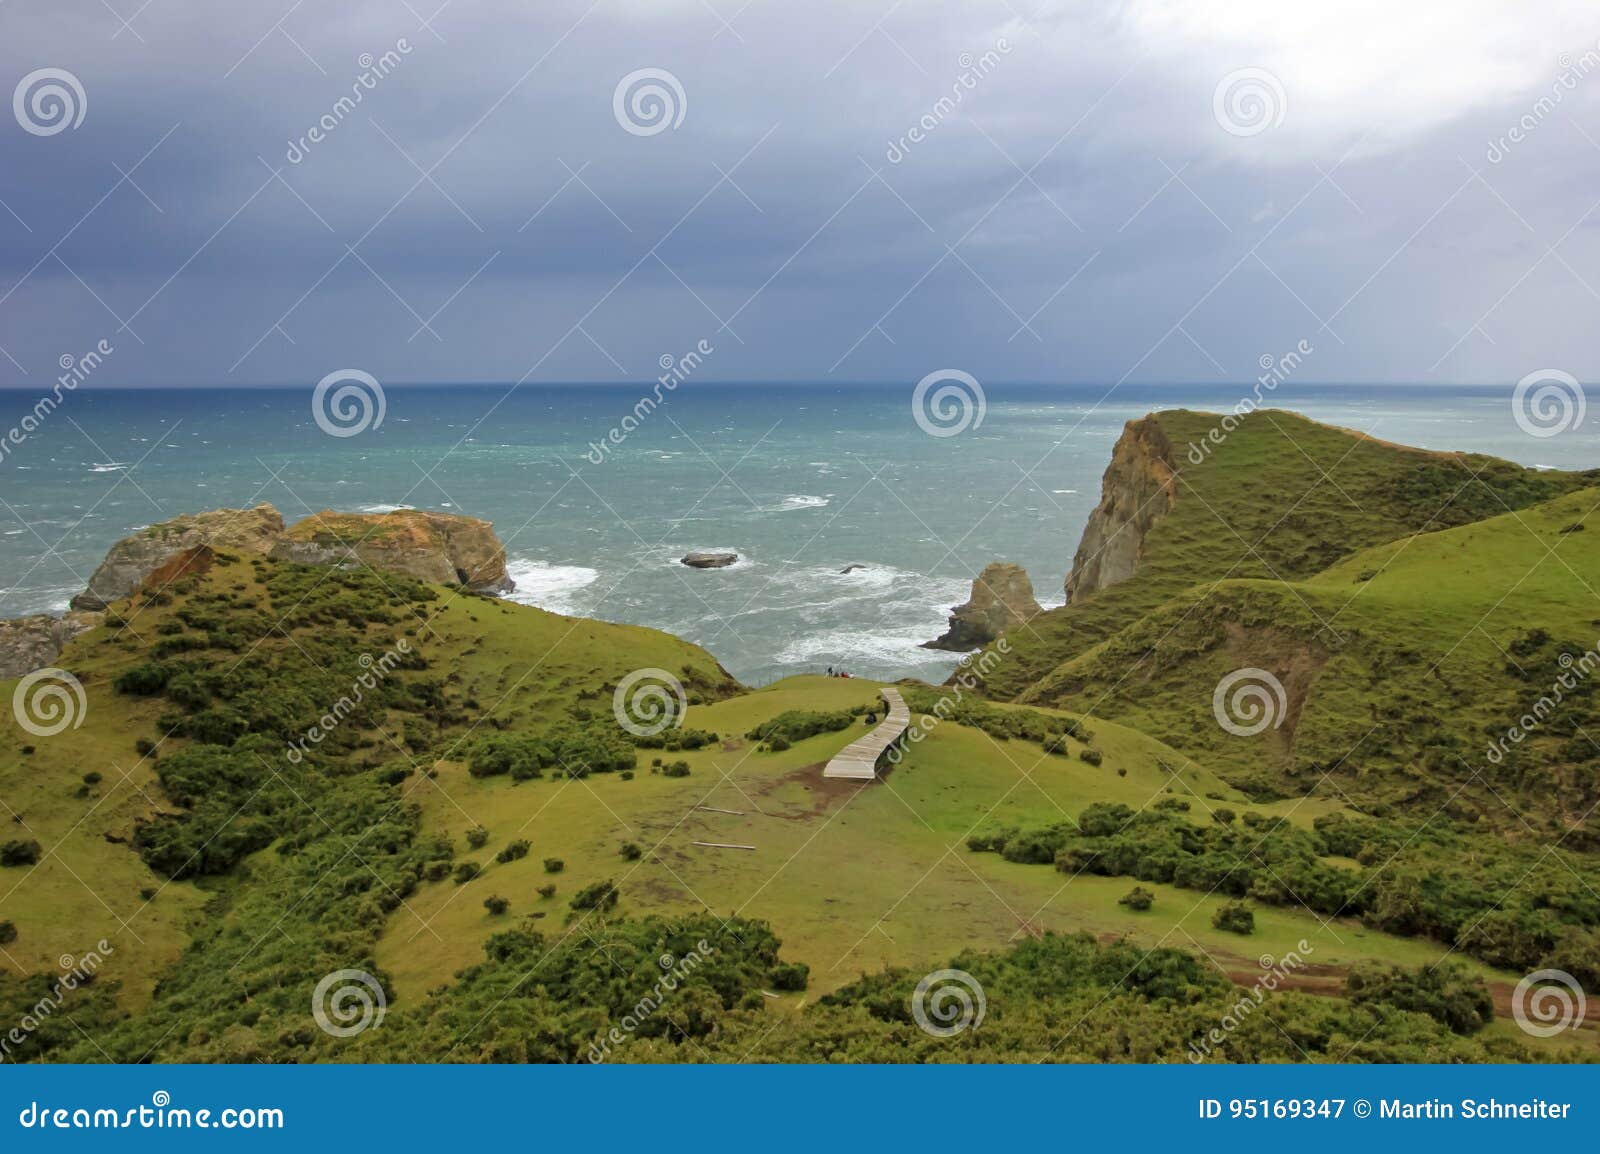 coastal view of the muelle de las almas, ocean in the background, chiloe island, chile